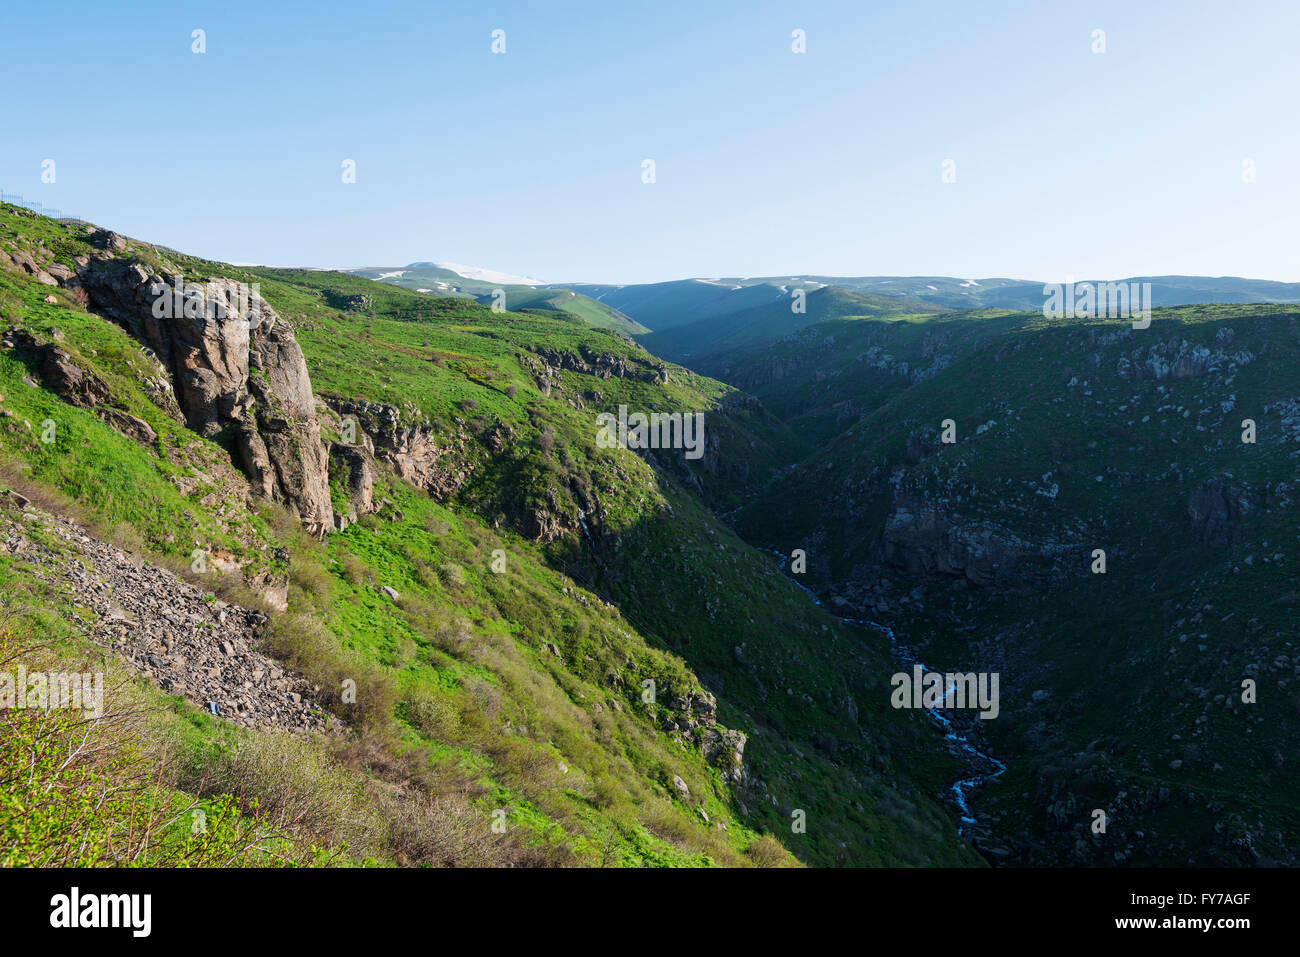 Eurasia, Caucasus region, Armenia, Aragatsotn province, scenery at Amberd on the slopes of Mt Aragat Stock Photo